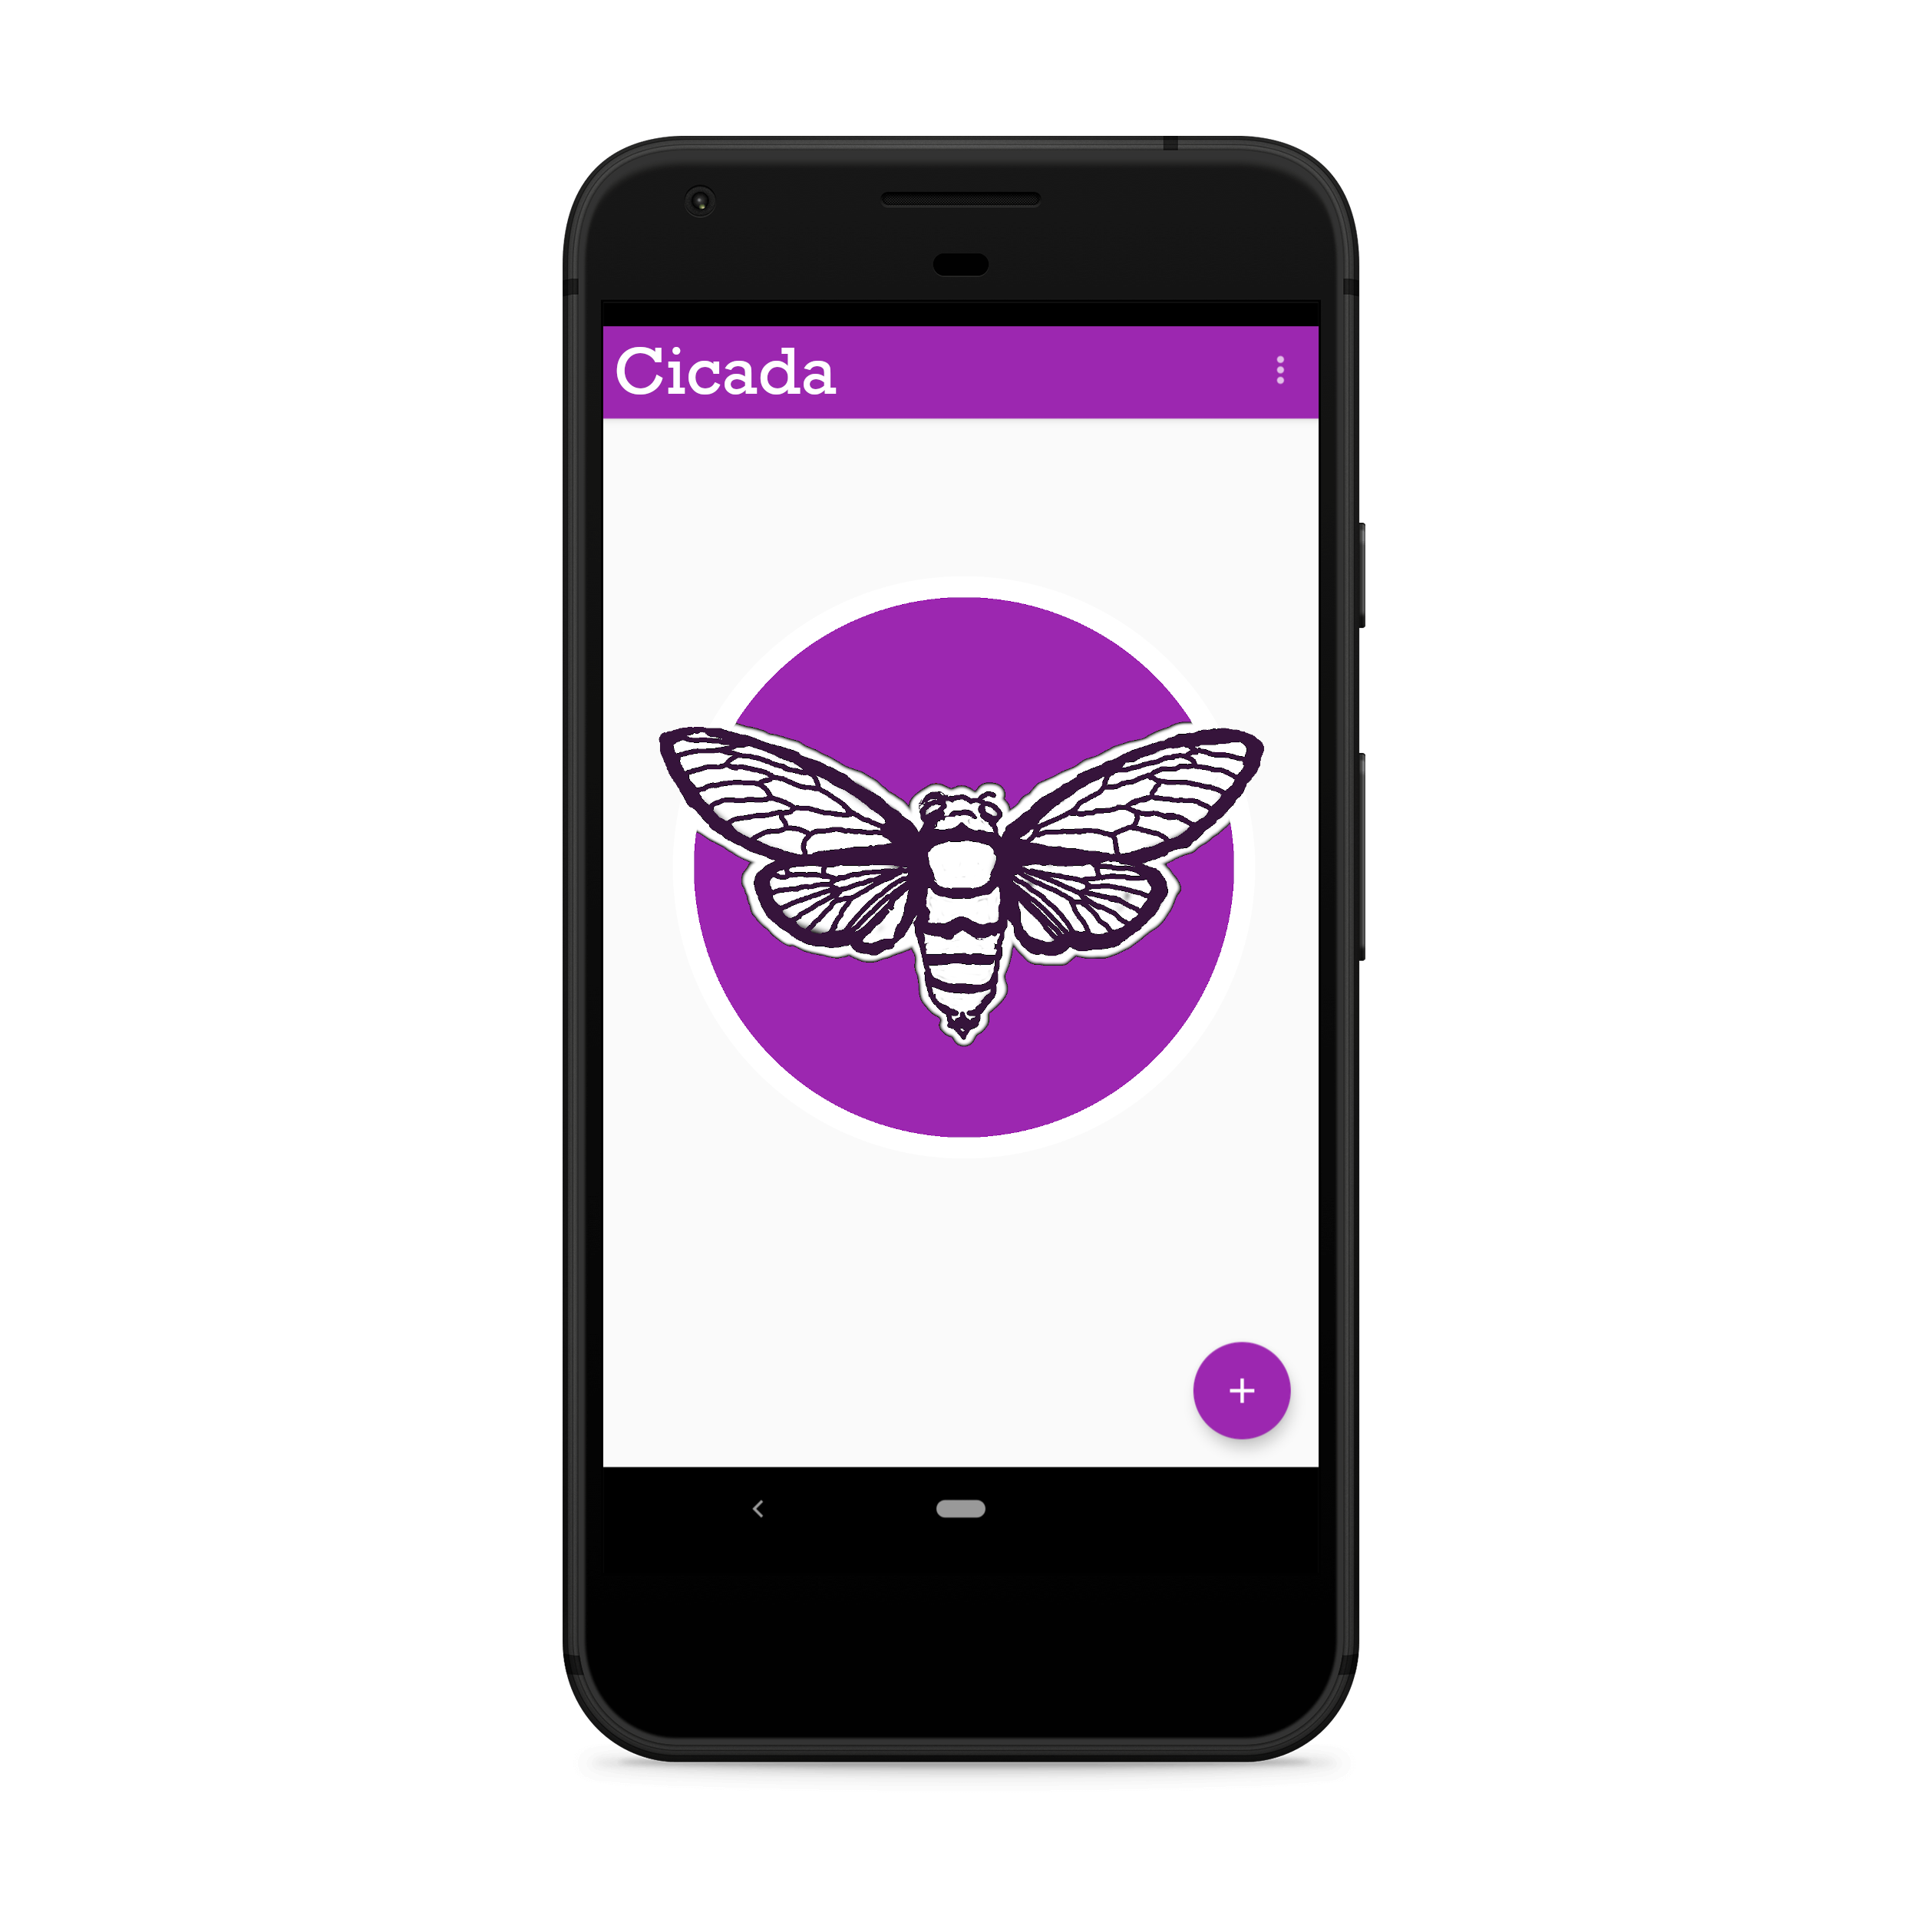 Cicada on Android